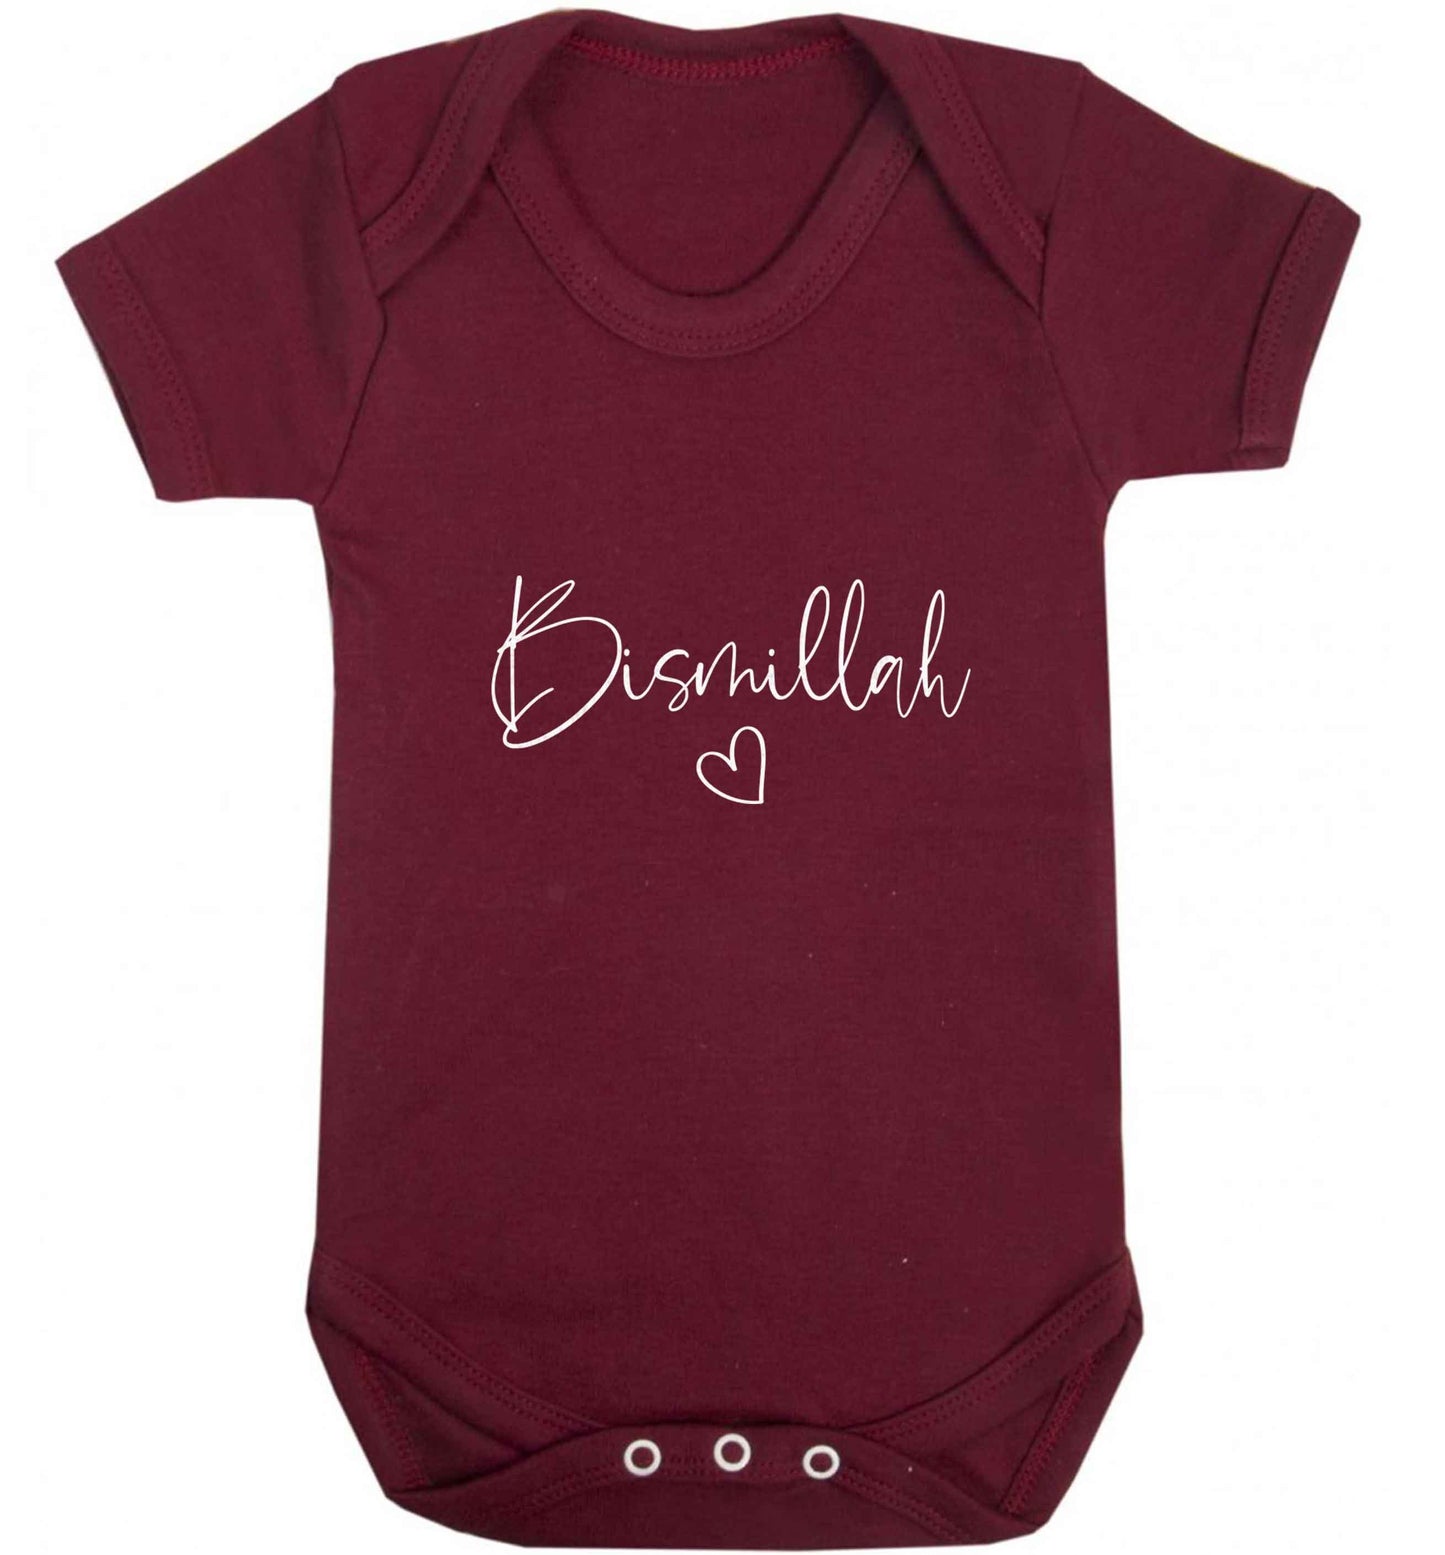 Bismillah baby vest maroon 18-24 months